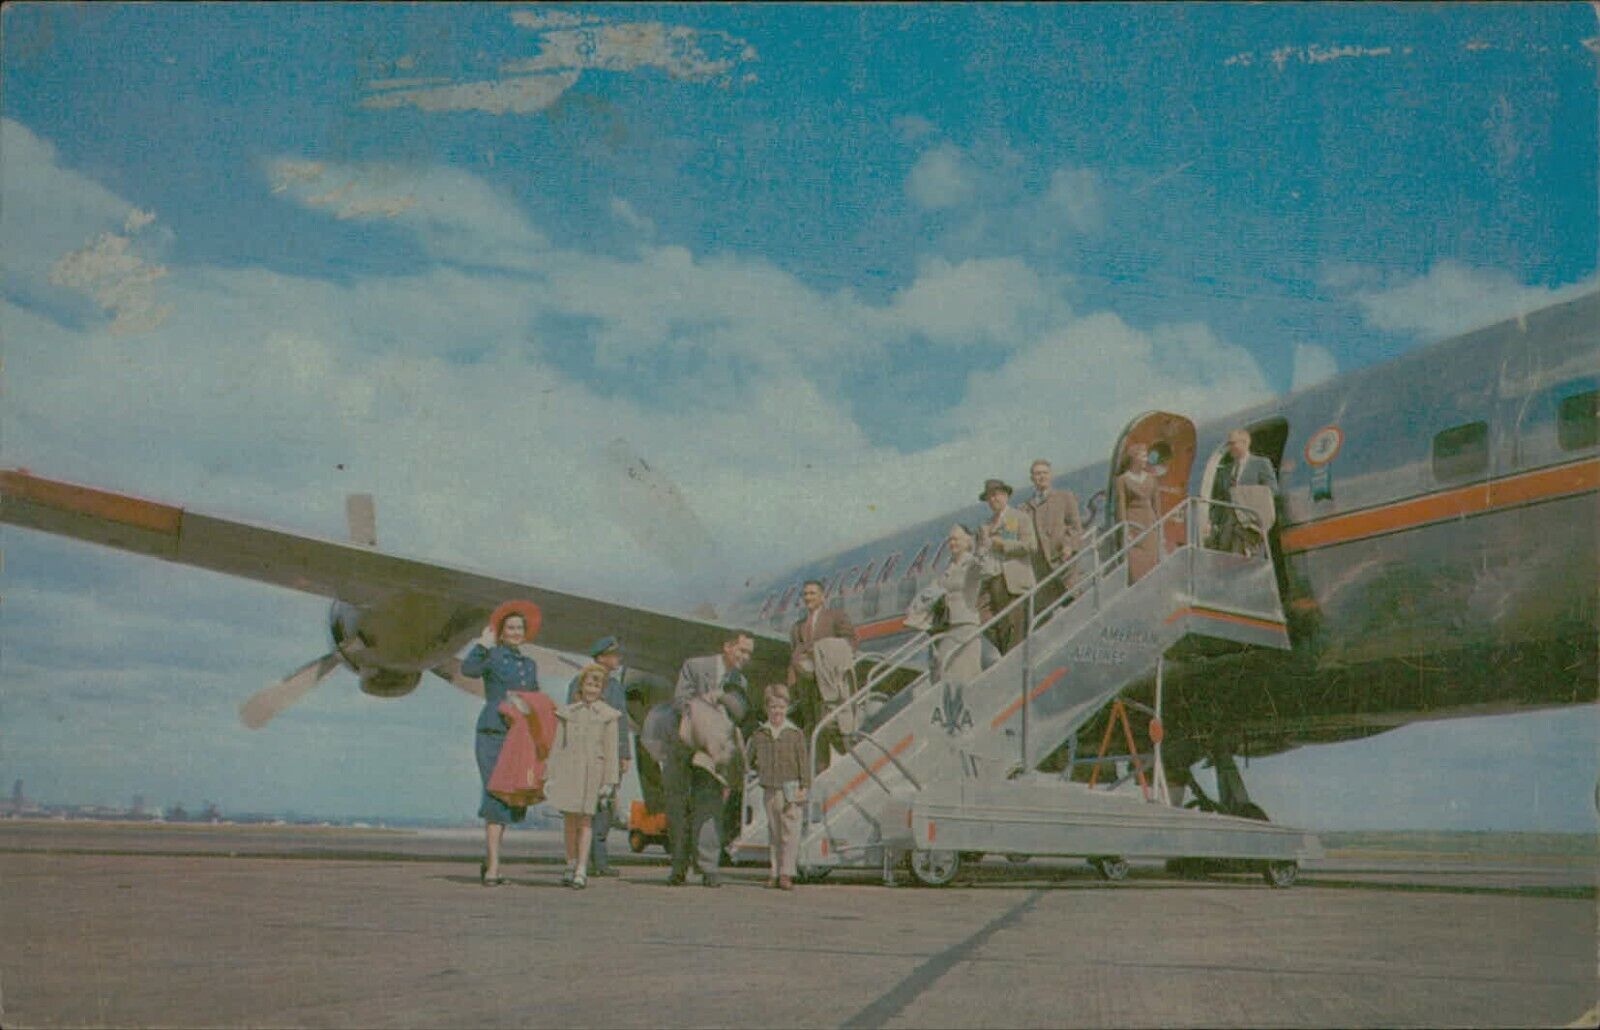 Postcard DC-6 Blue Ribbon Air Coach American Airlines